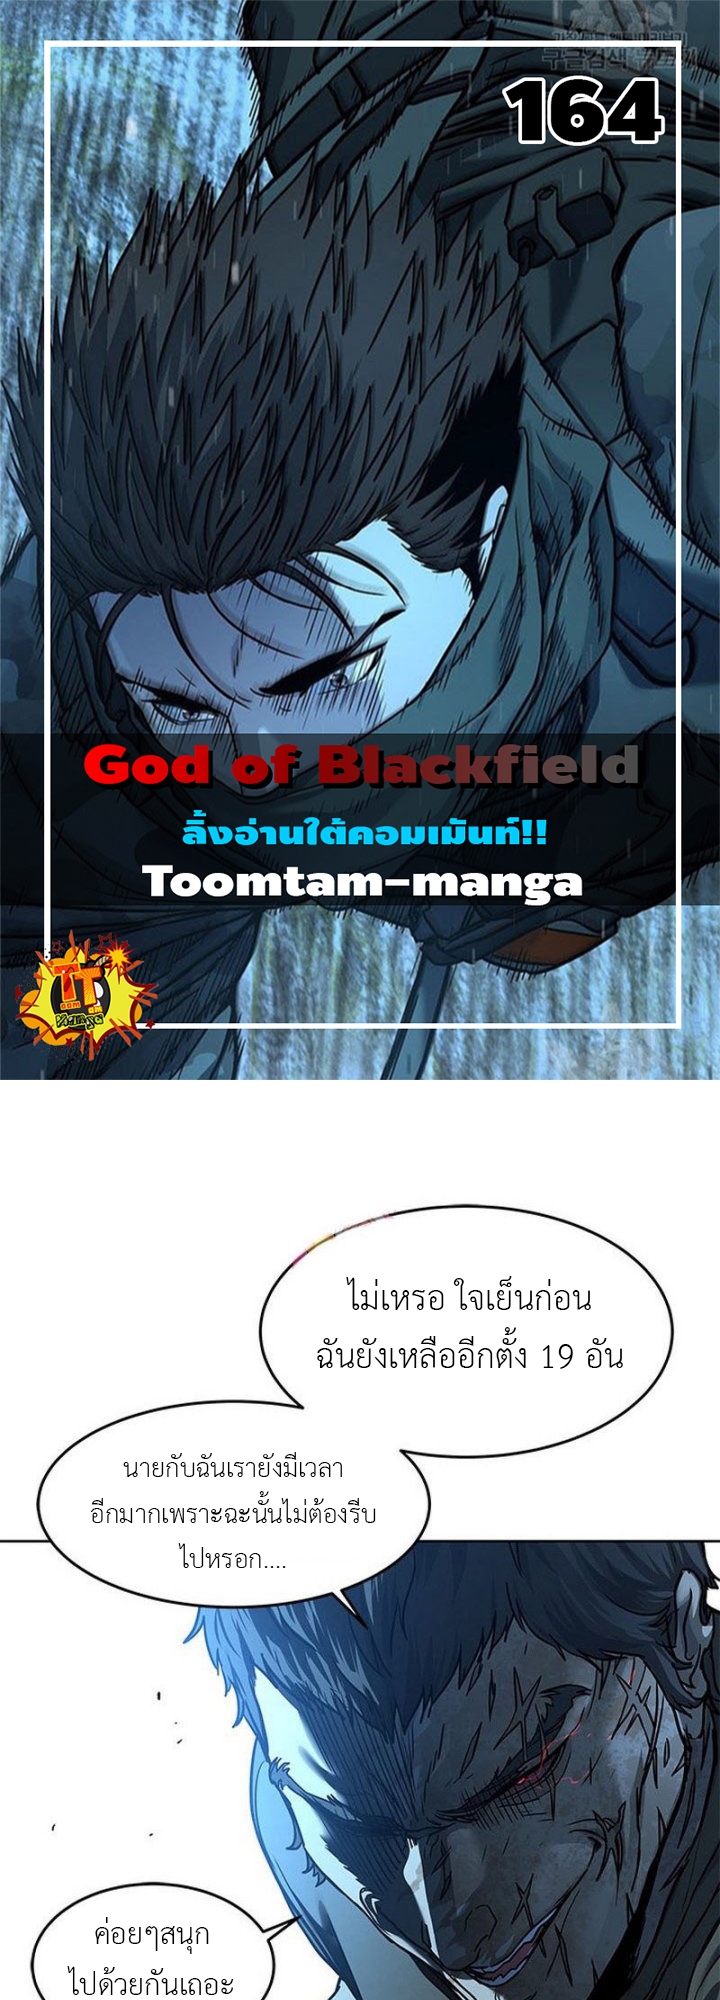 God of Blackfield 164 20 08 660001